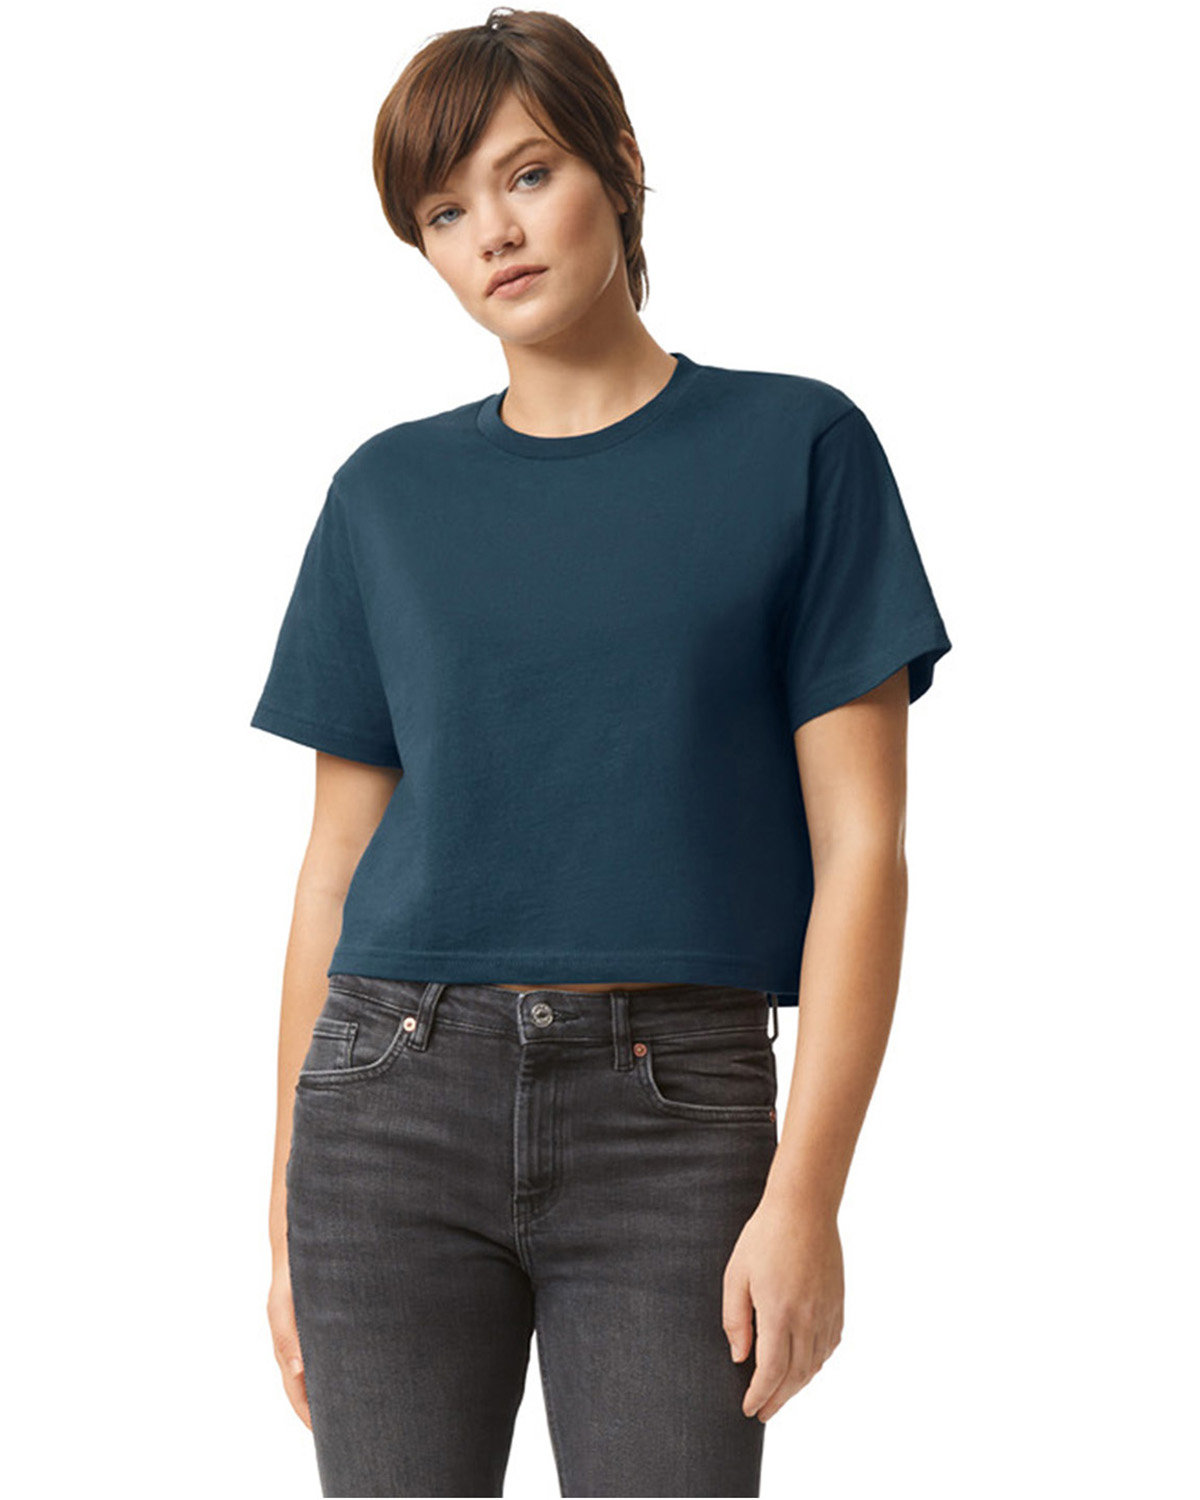 American Apparel Ladies' Fine Jersey Boxy T-Shirt SEA BLUE 